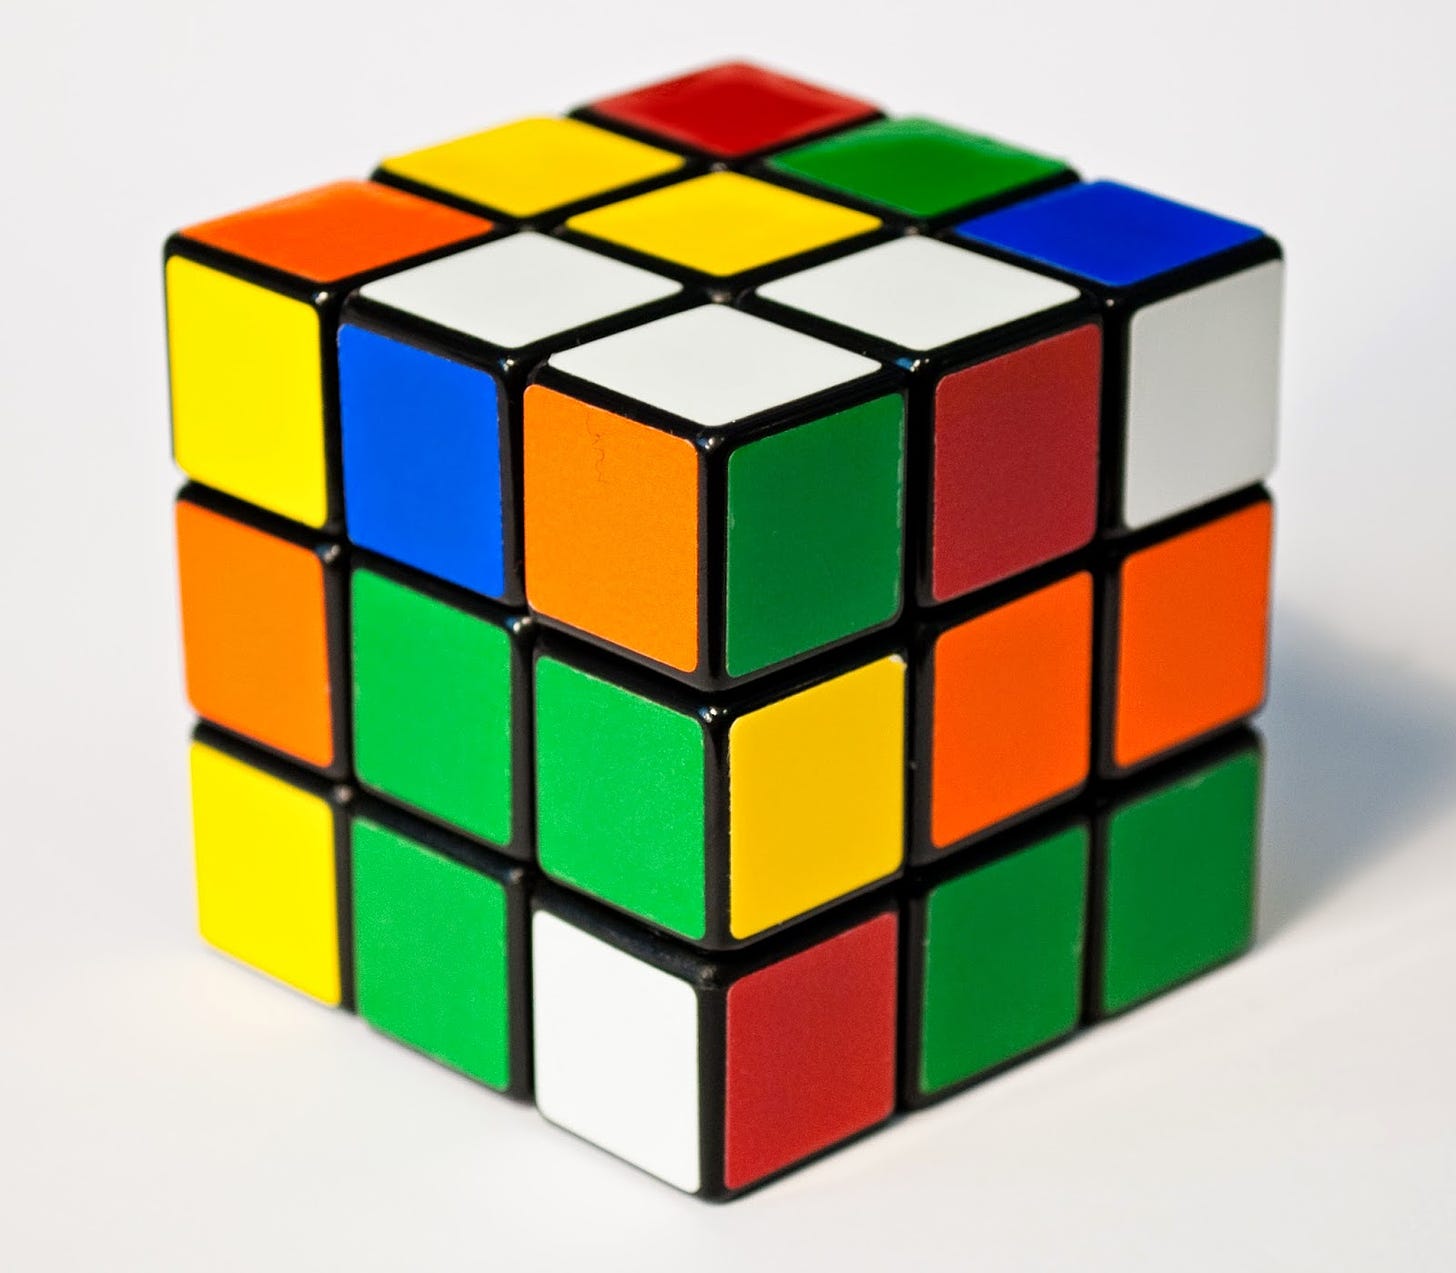 https://3.bp.blogspot.com/-GSgR09KVGns/U8Gb6tFhP0I/AAAAAAAABFI/pY6o4leFvdQ/s1600/Rubik's+Cube+scrambled.jpg